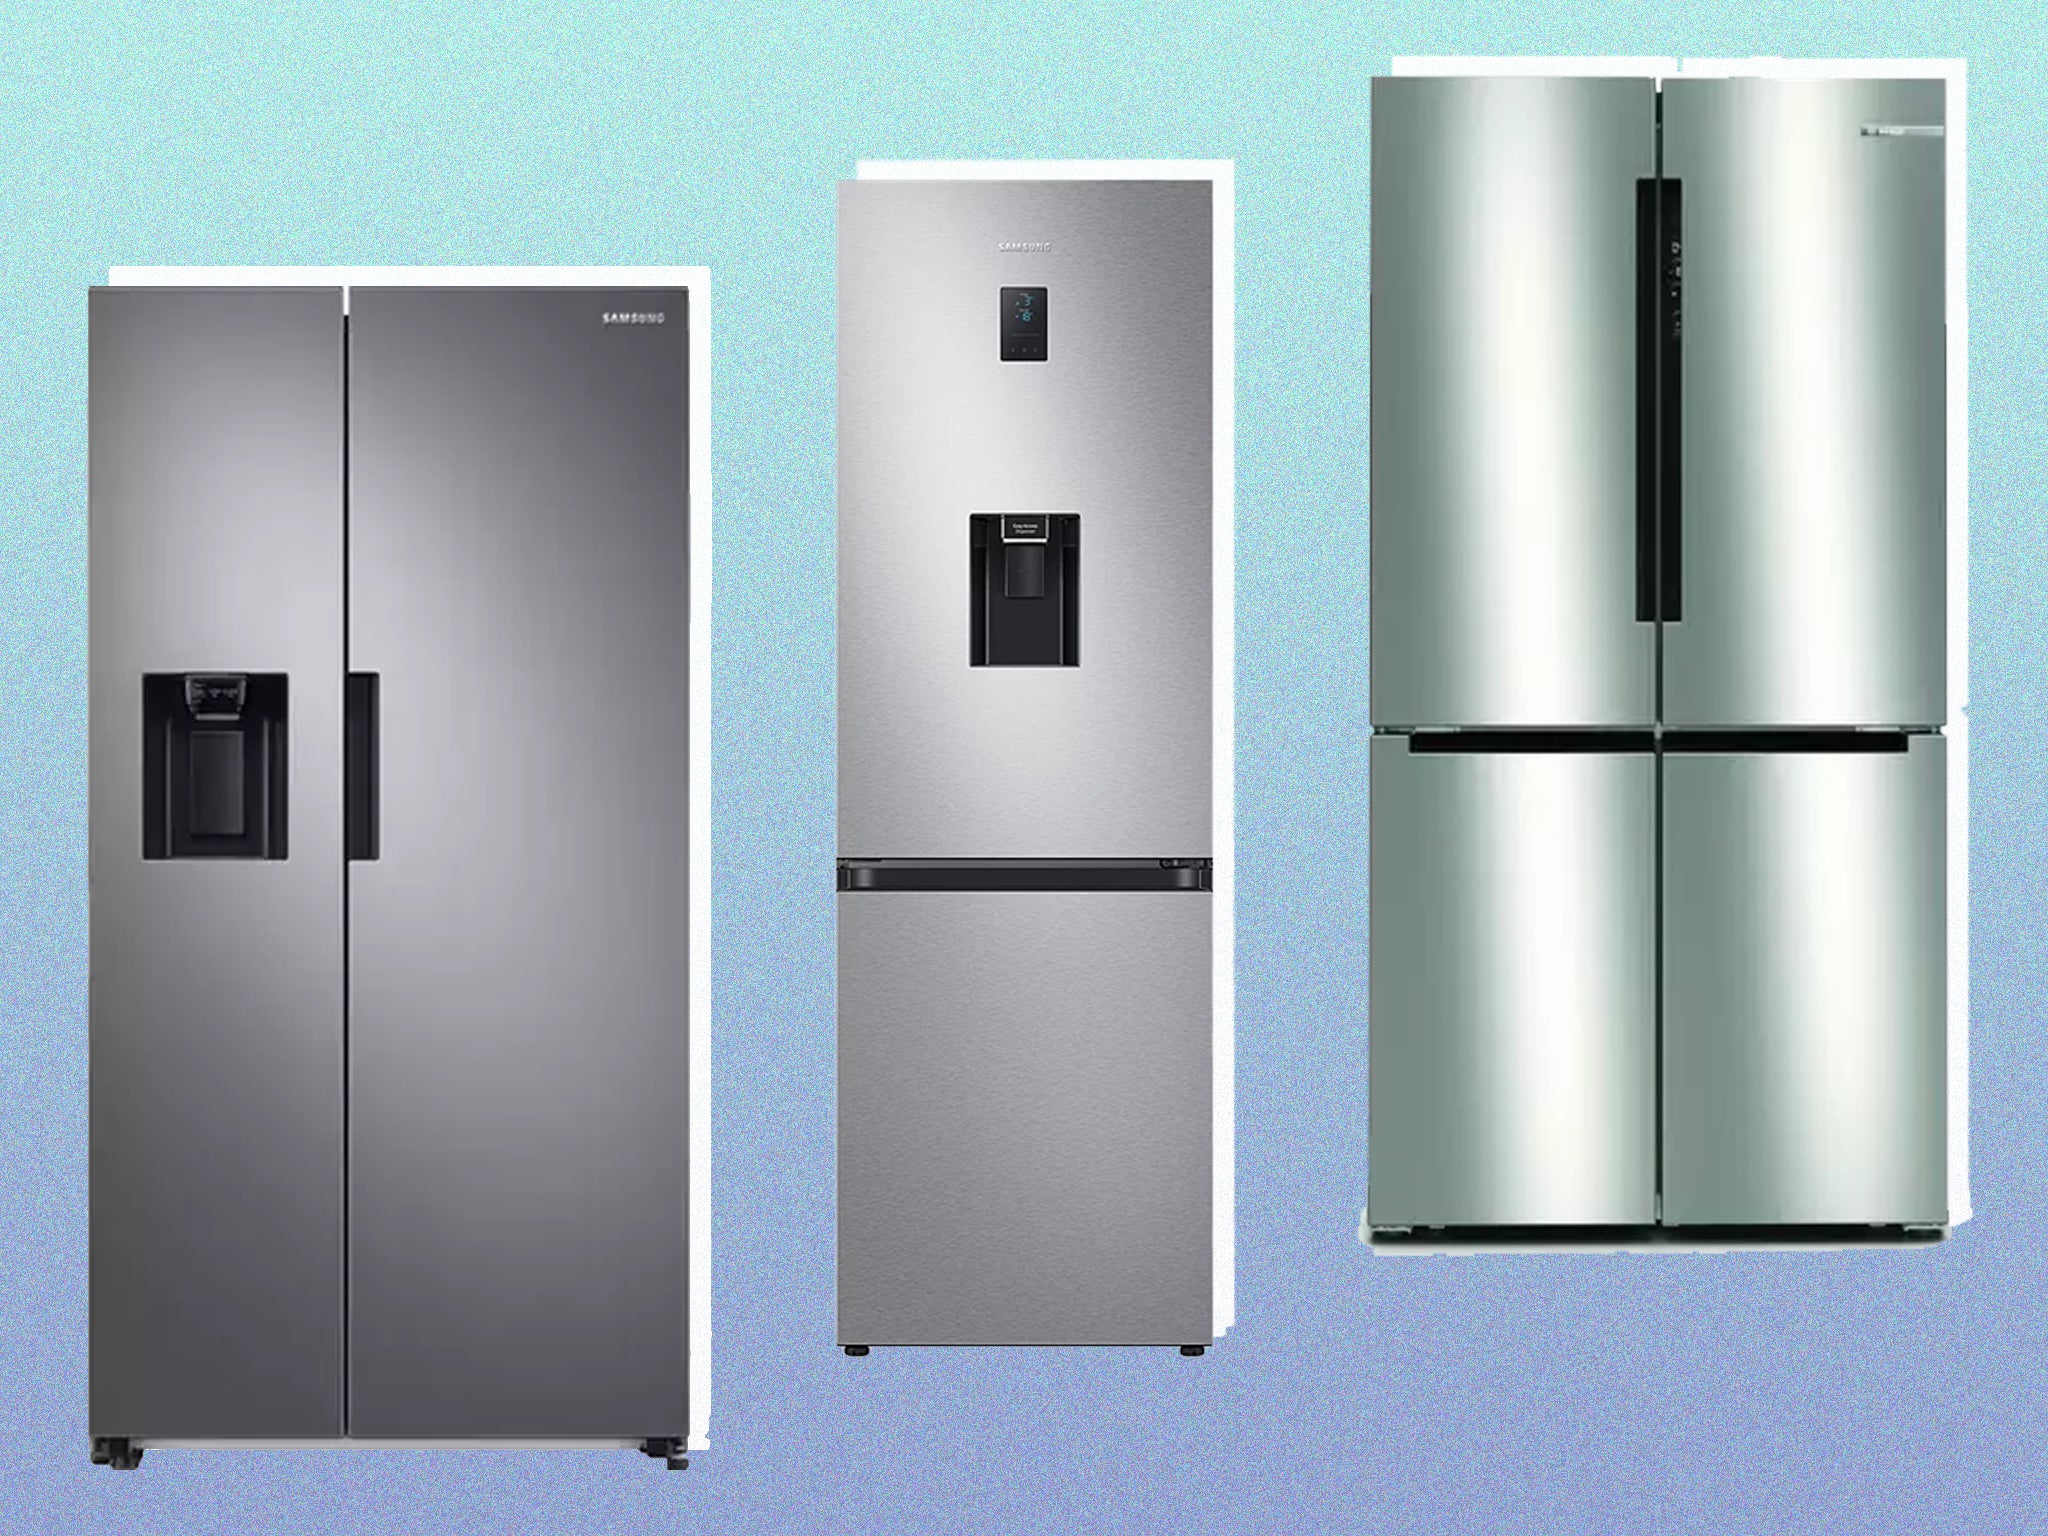 Hisense, Electricals, Fridge Freezer, Smart TV